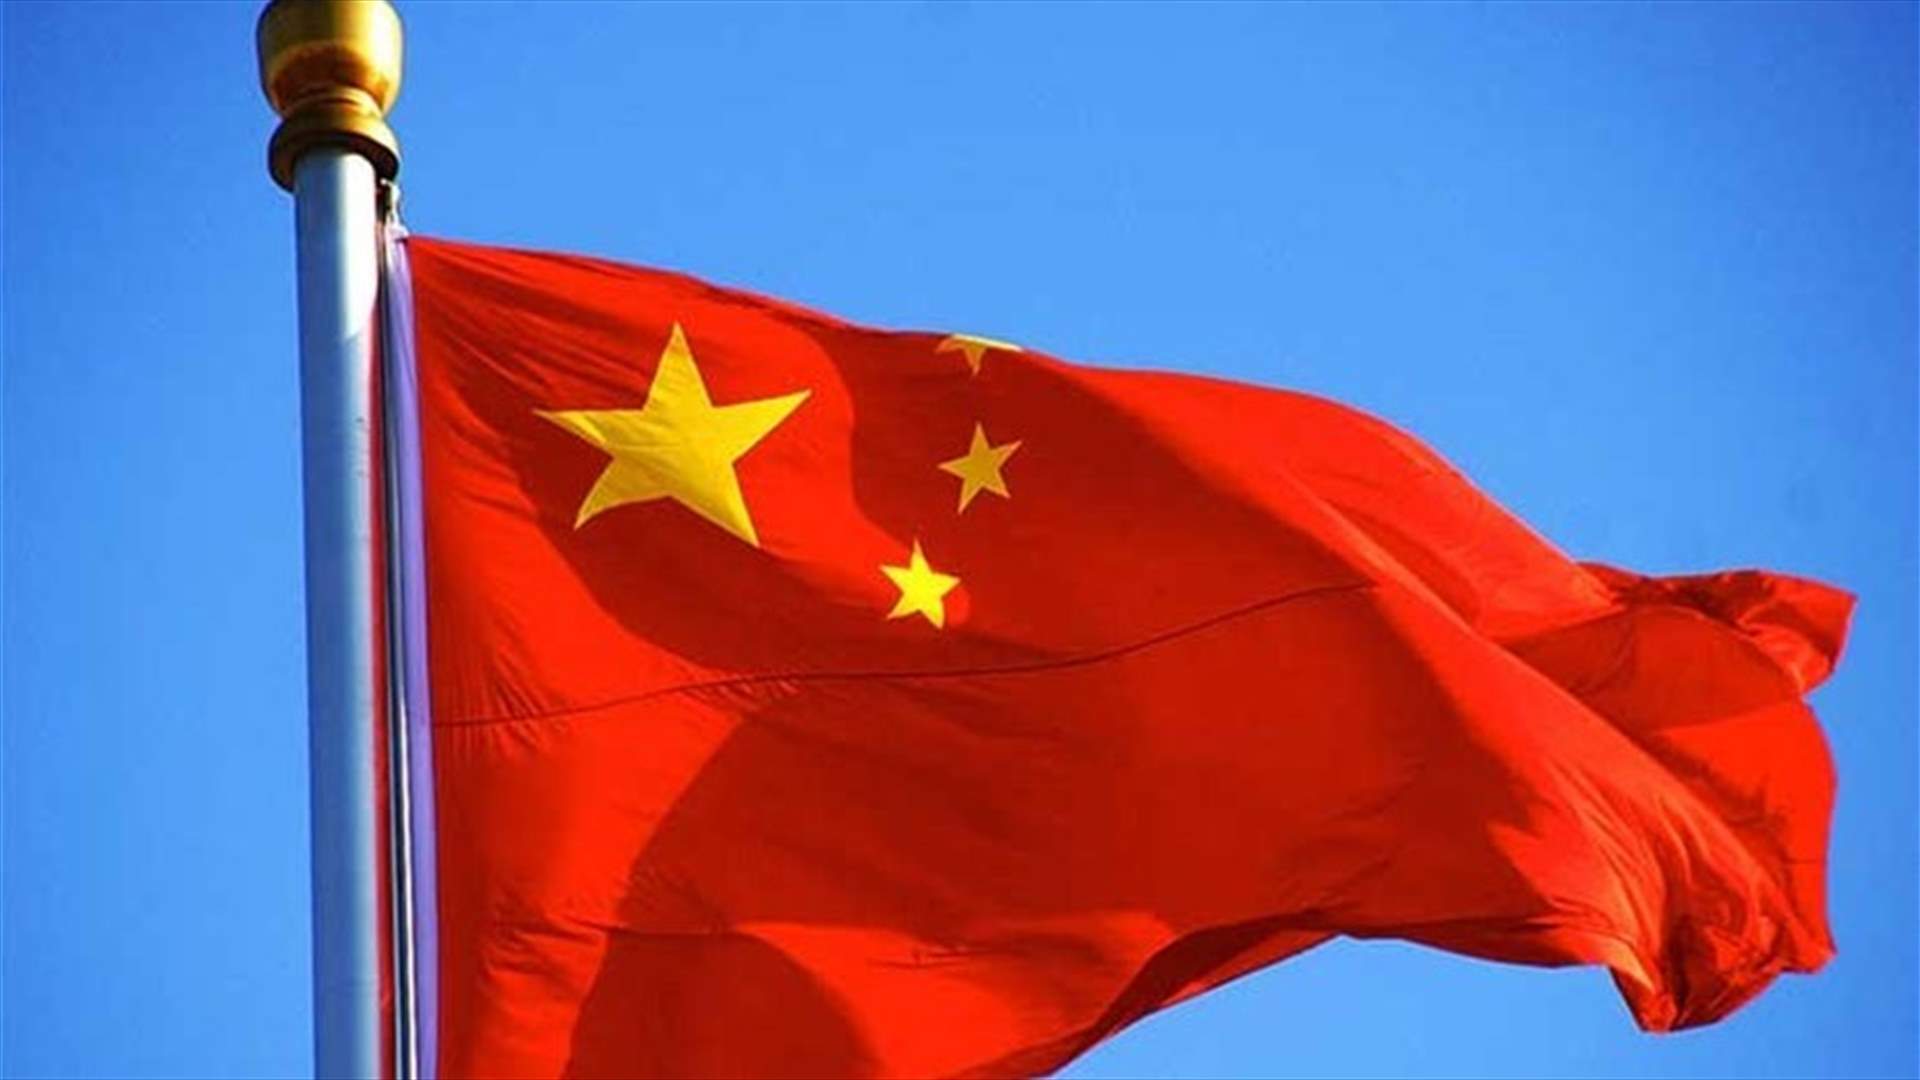 China government spokesman says US military may have brought virus to China